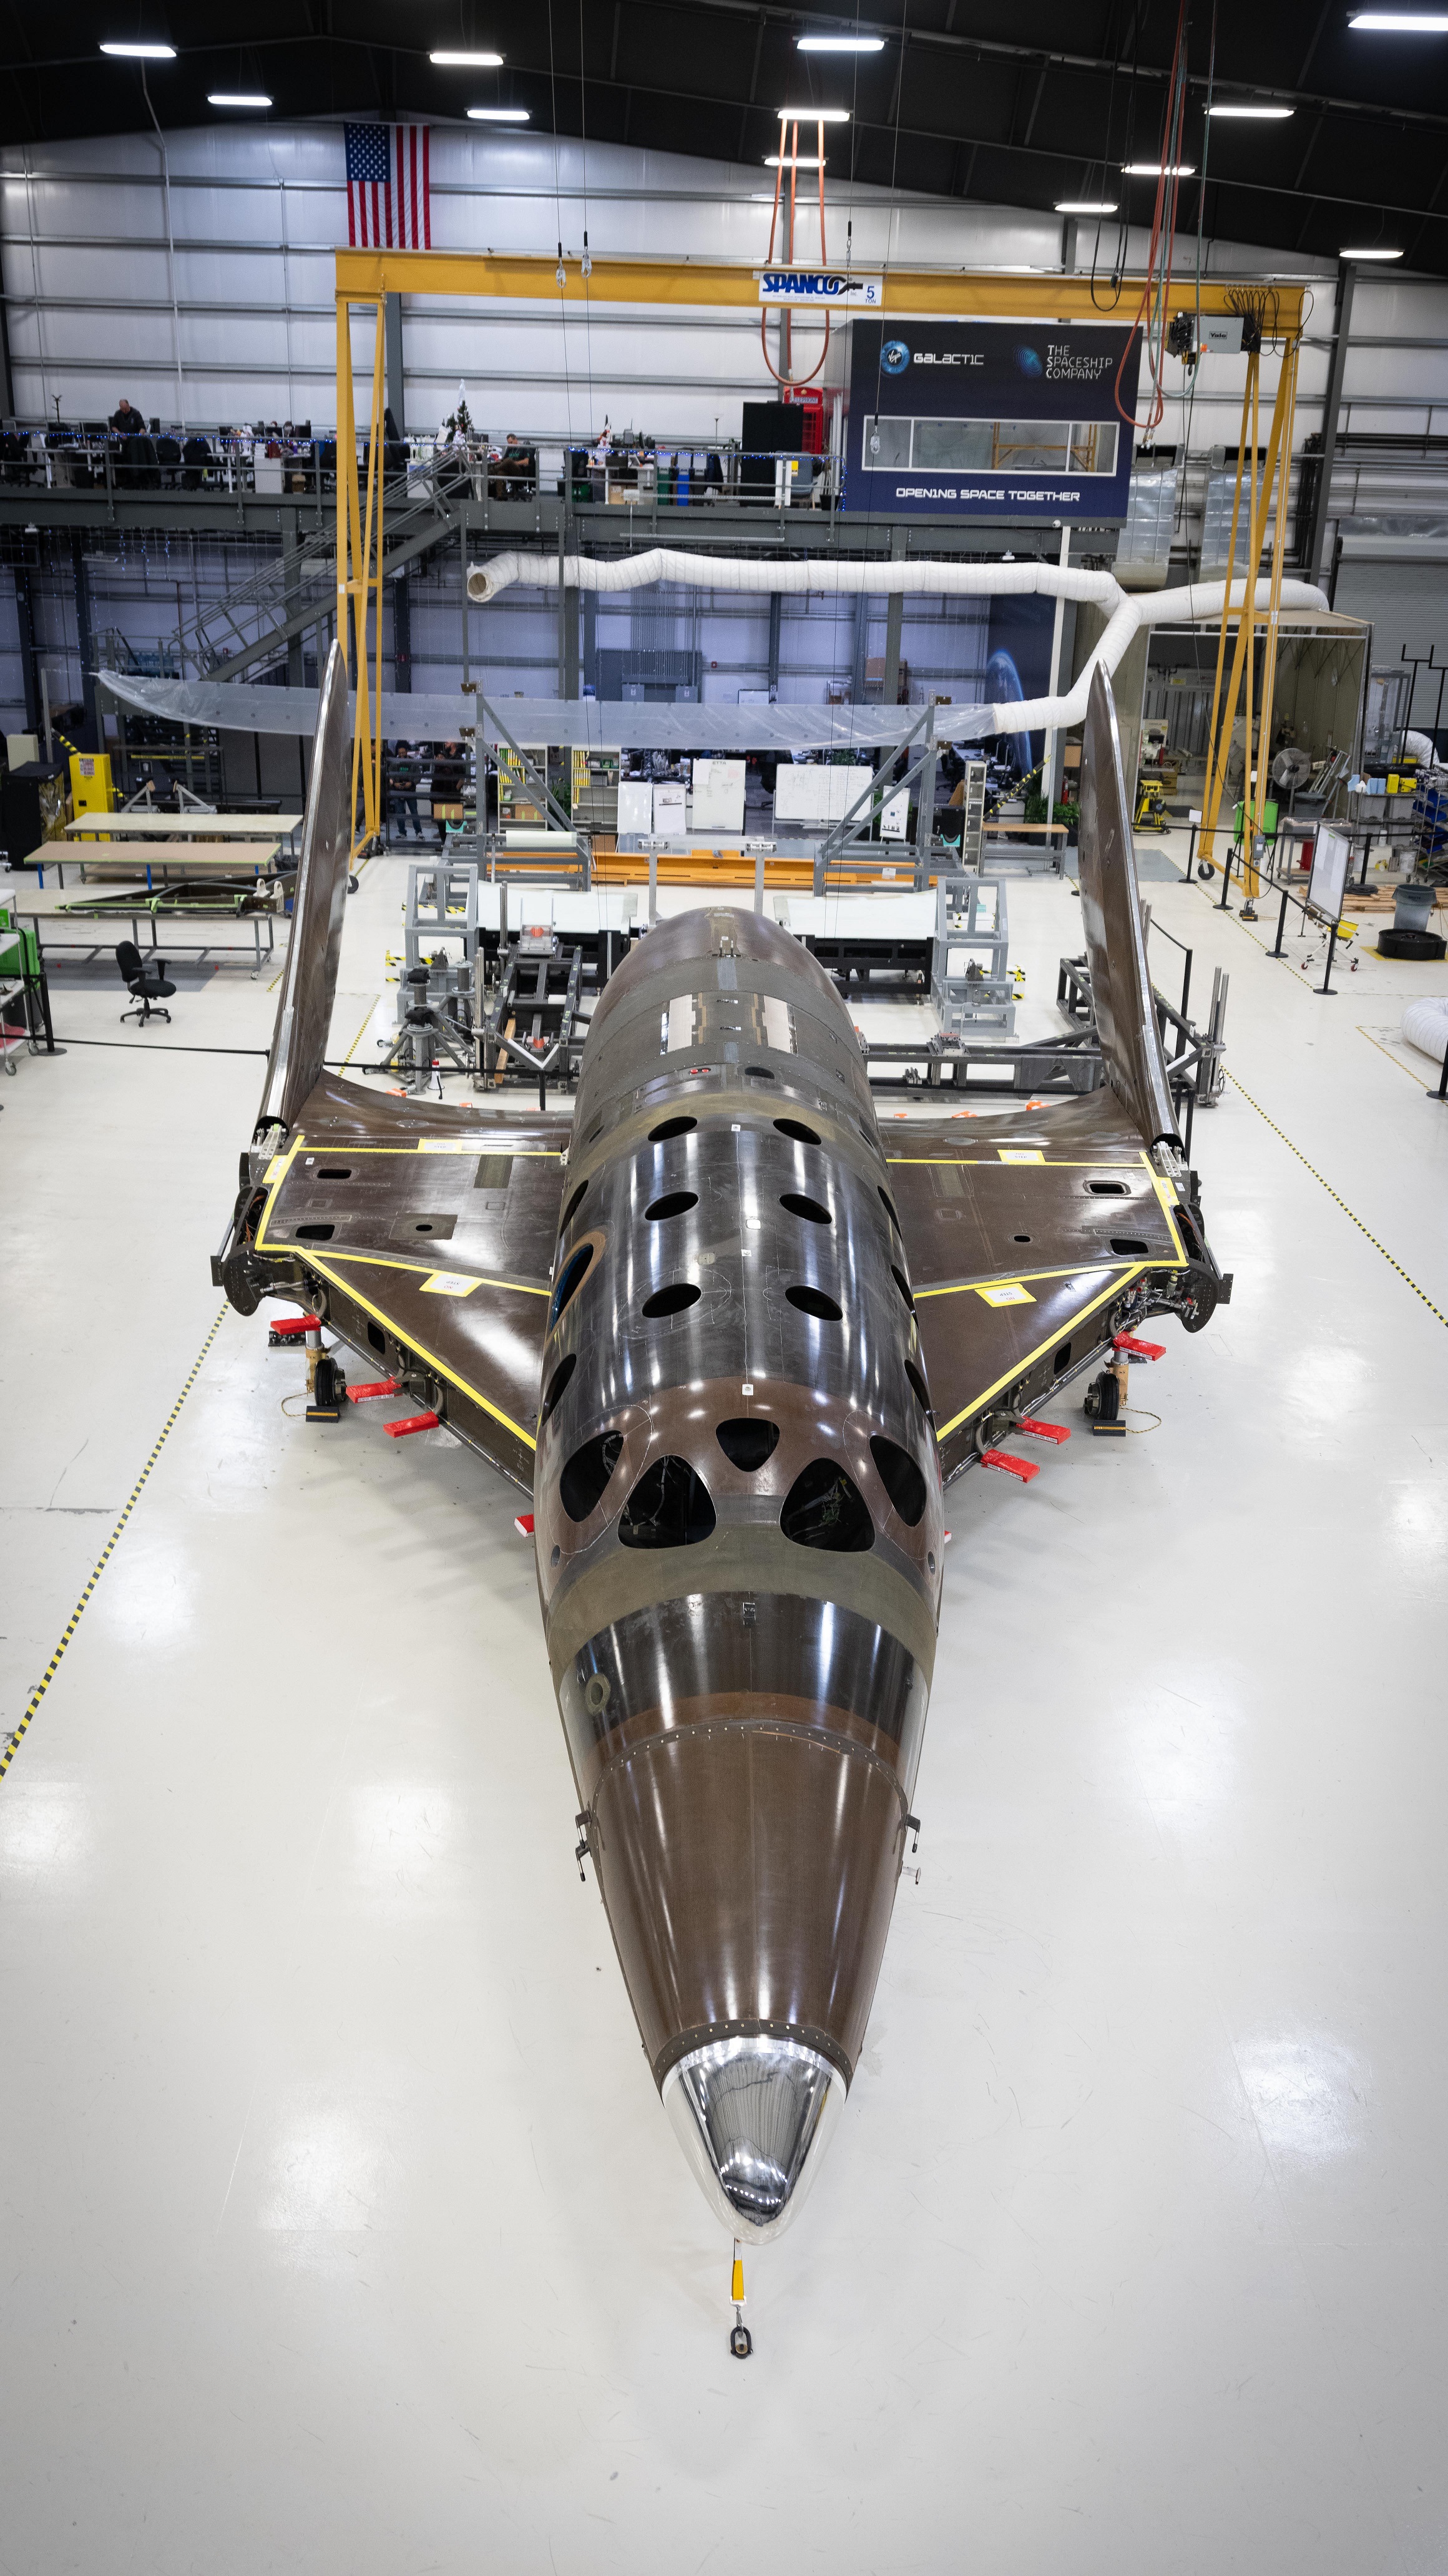 Latest spaceship in Virgin Galactic's fleet completes major build milestone  - AviTrader Aviation News